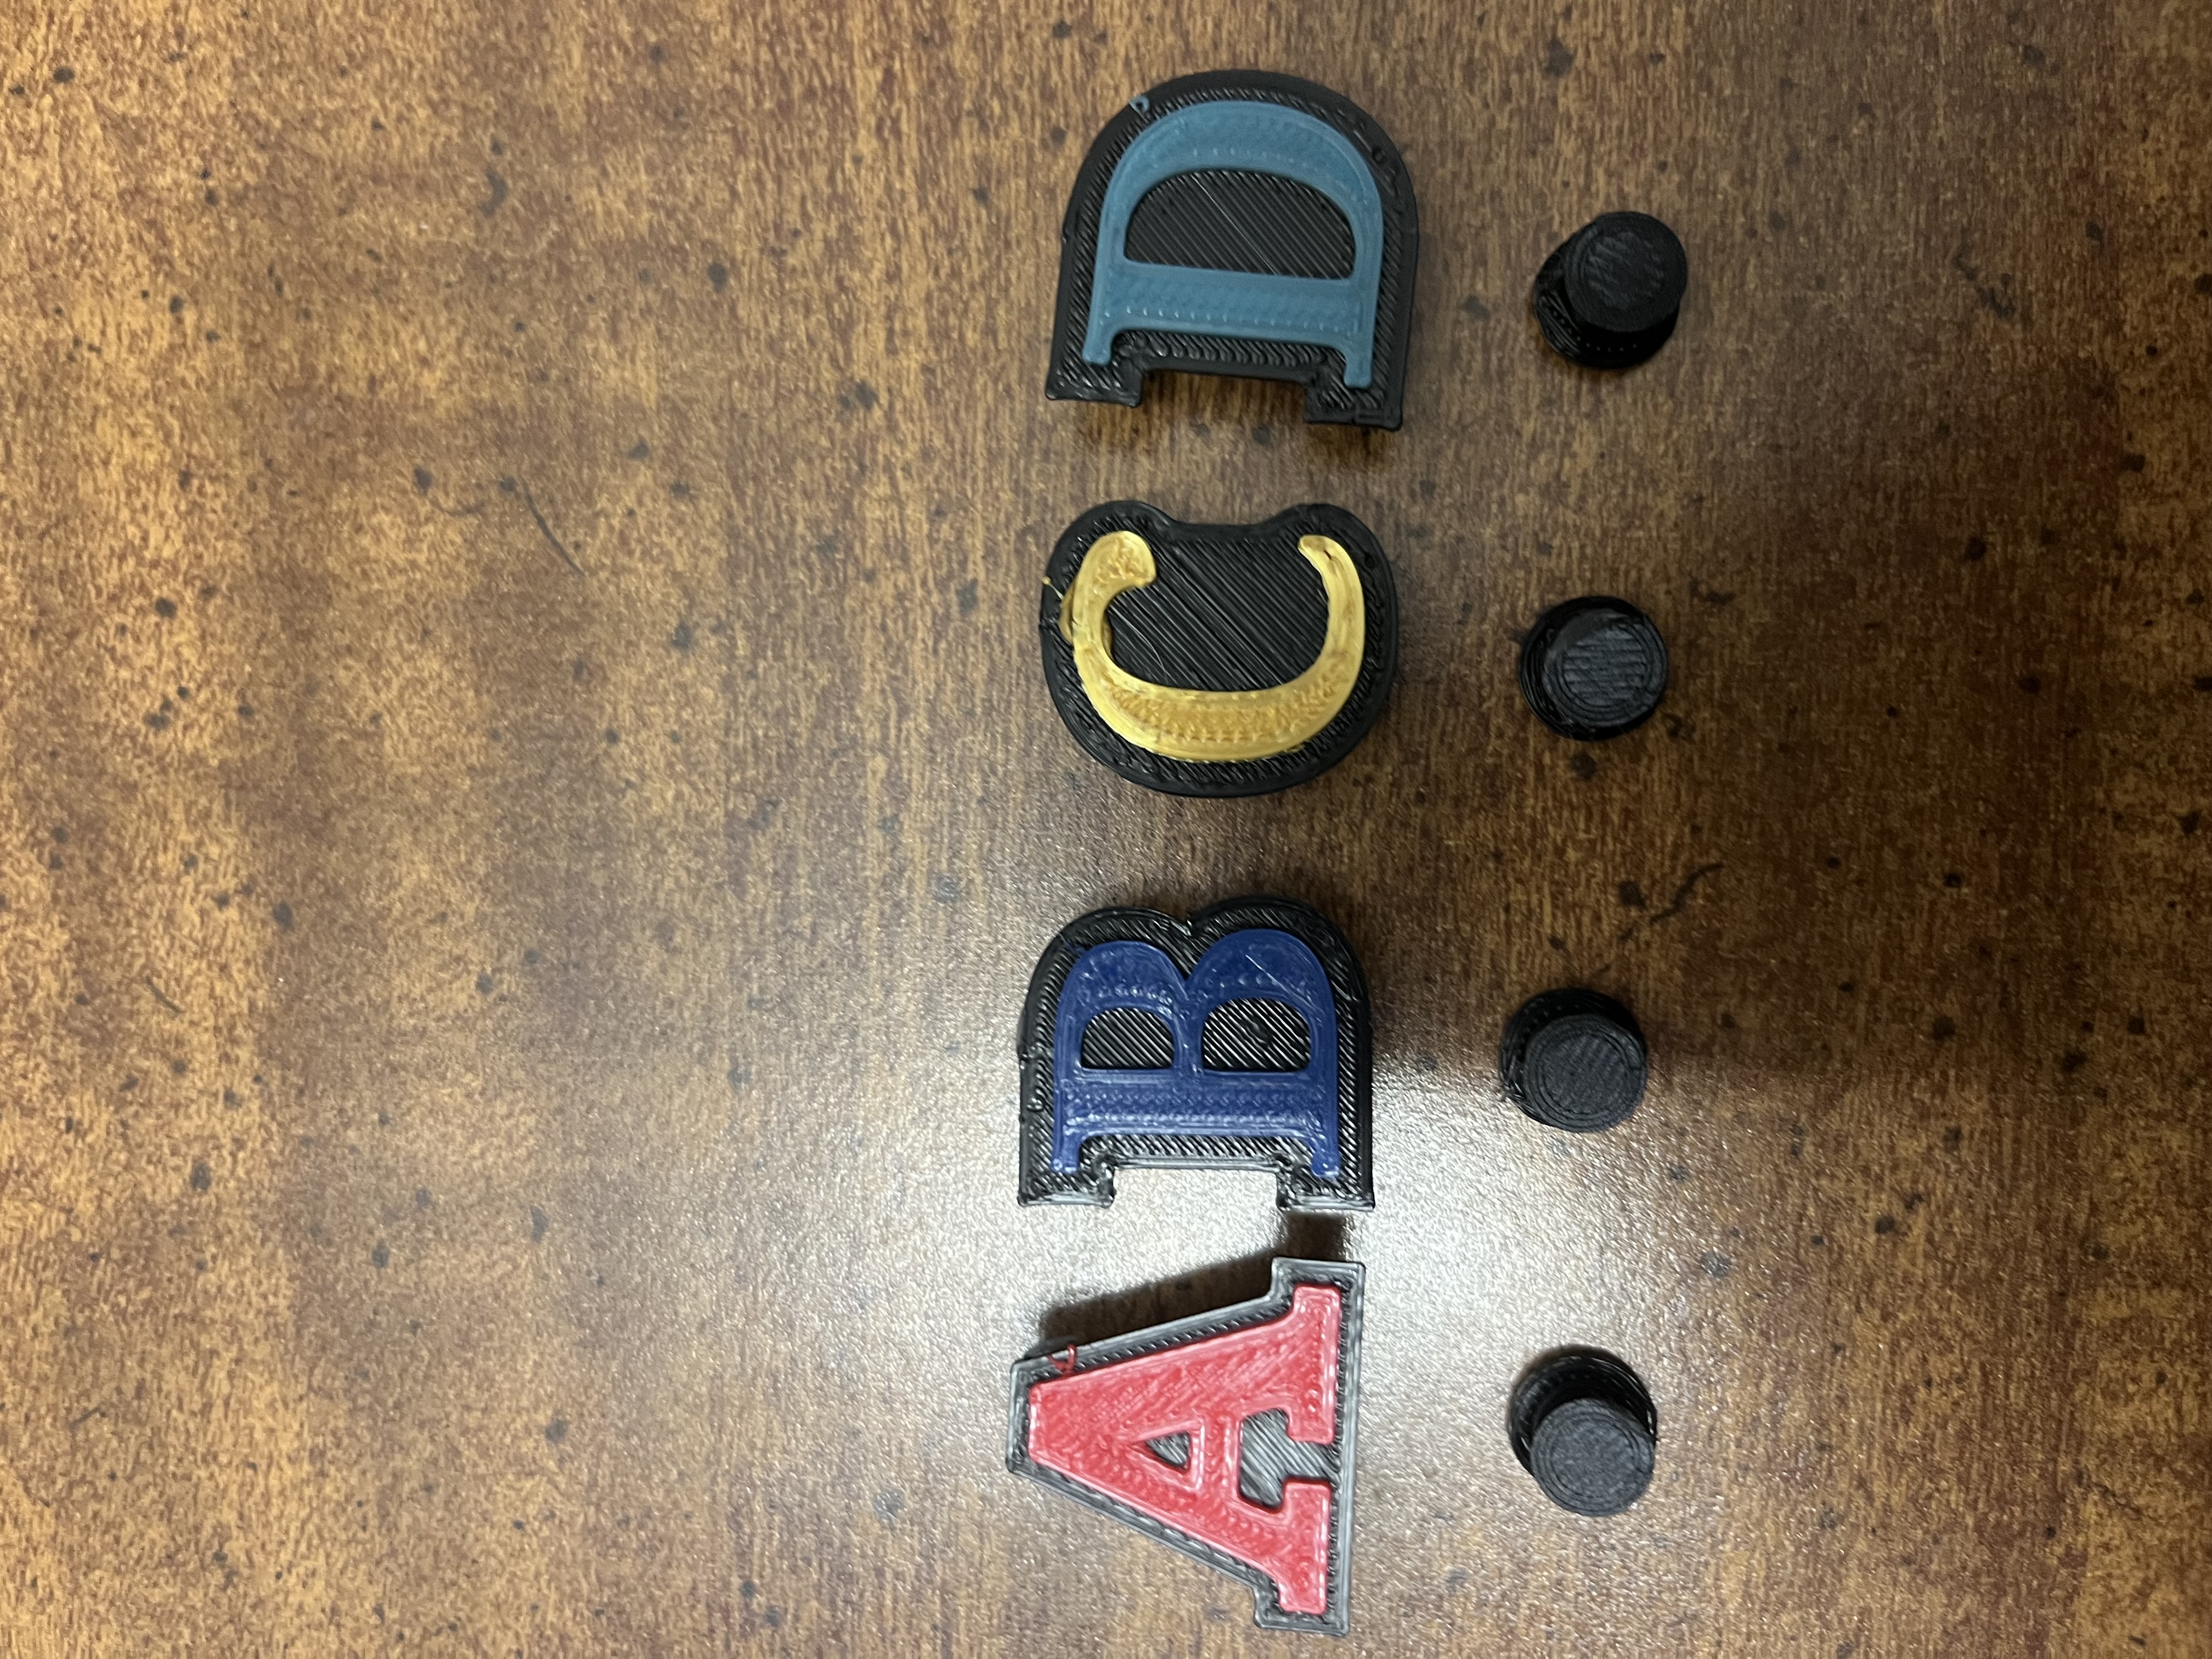 alphabet crocs jibbitz 3D Models to Print - yeggi